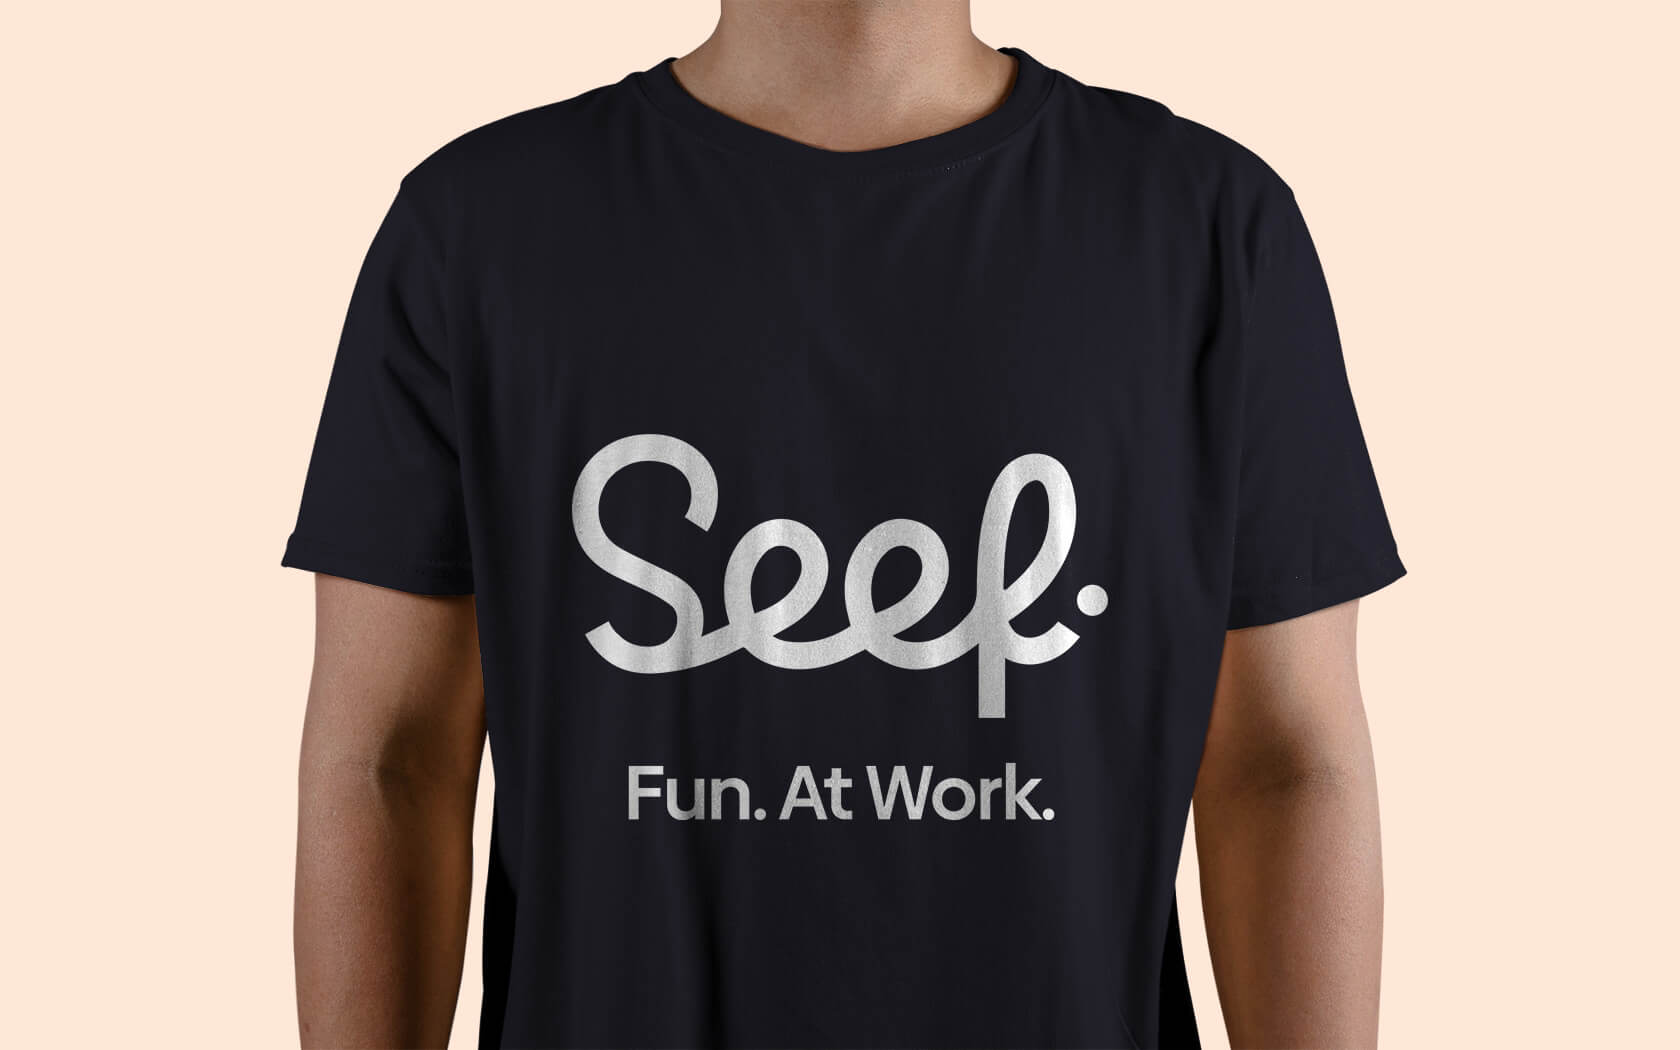 Seef. Branded T-Shirt